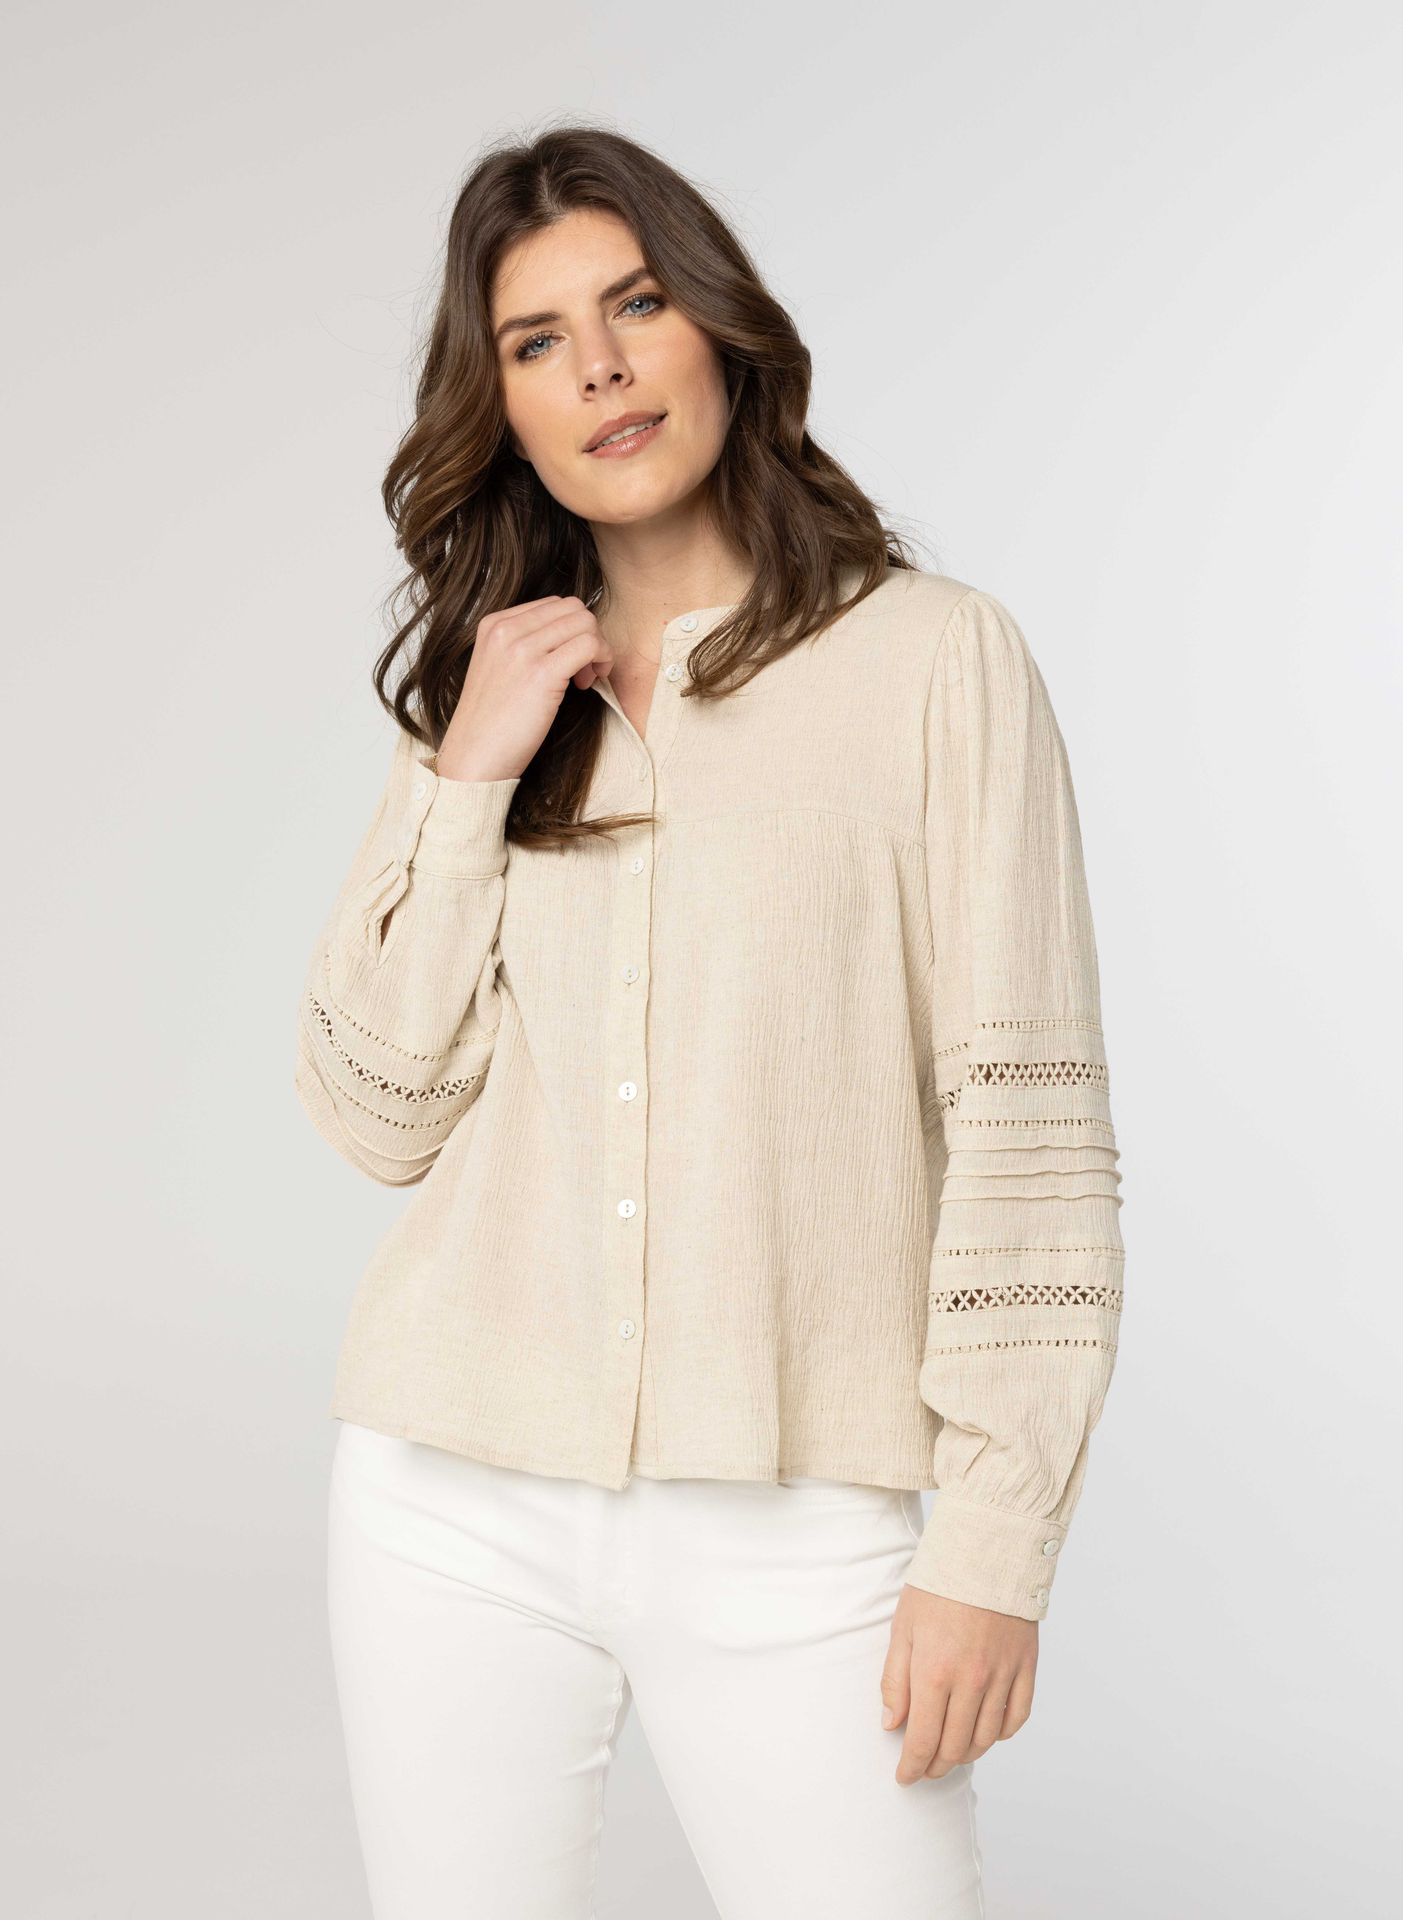 Norah Zandkleurige blouse sand 213957-110